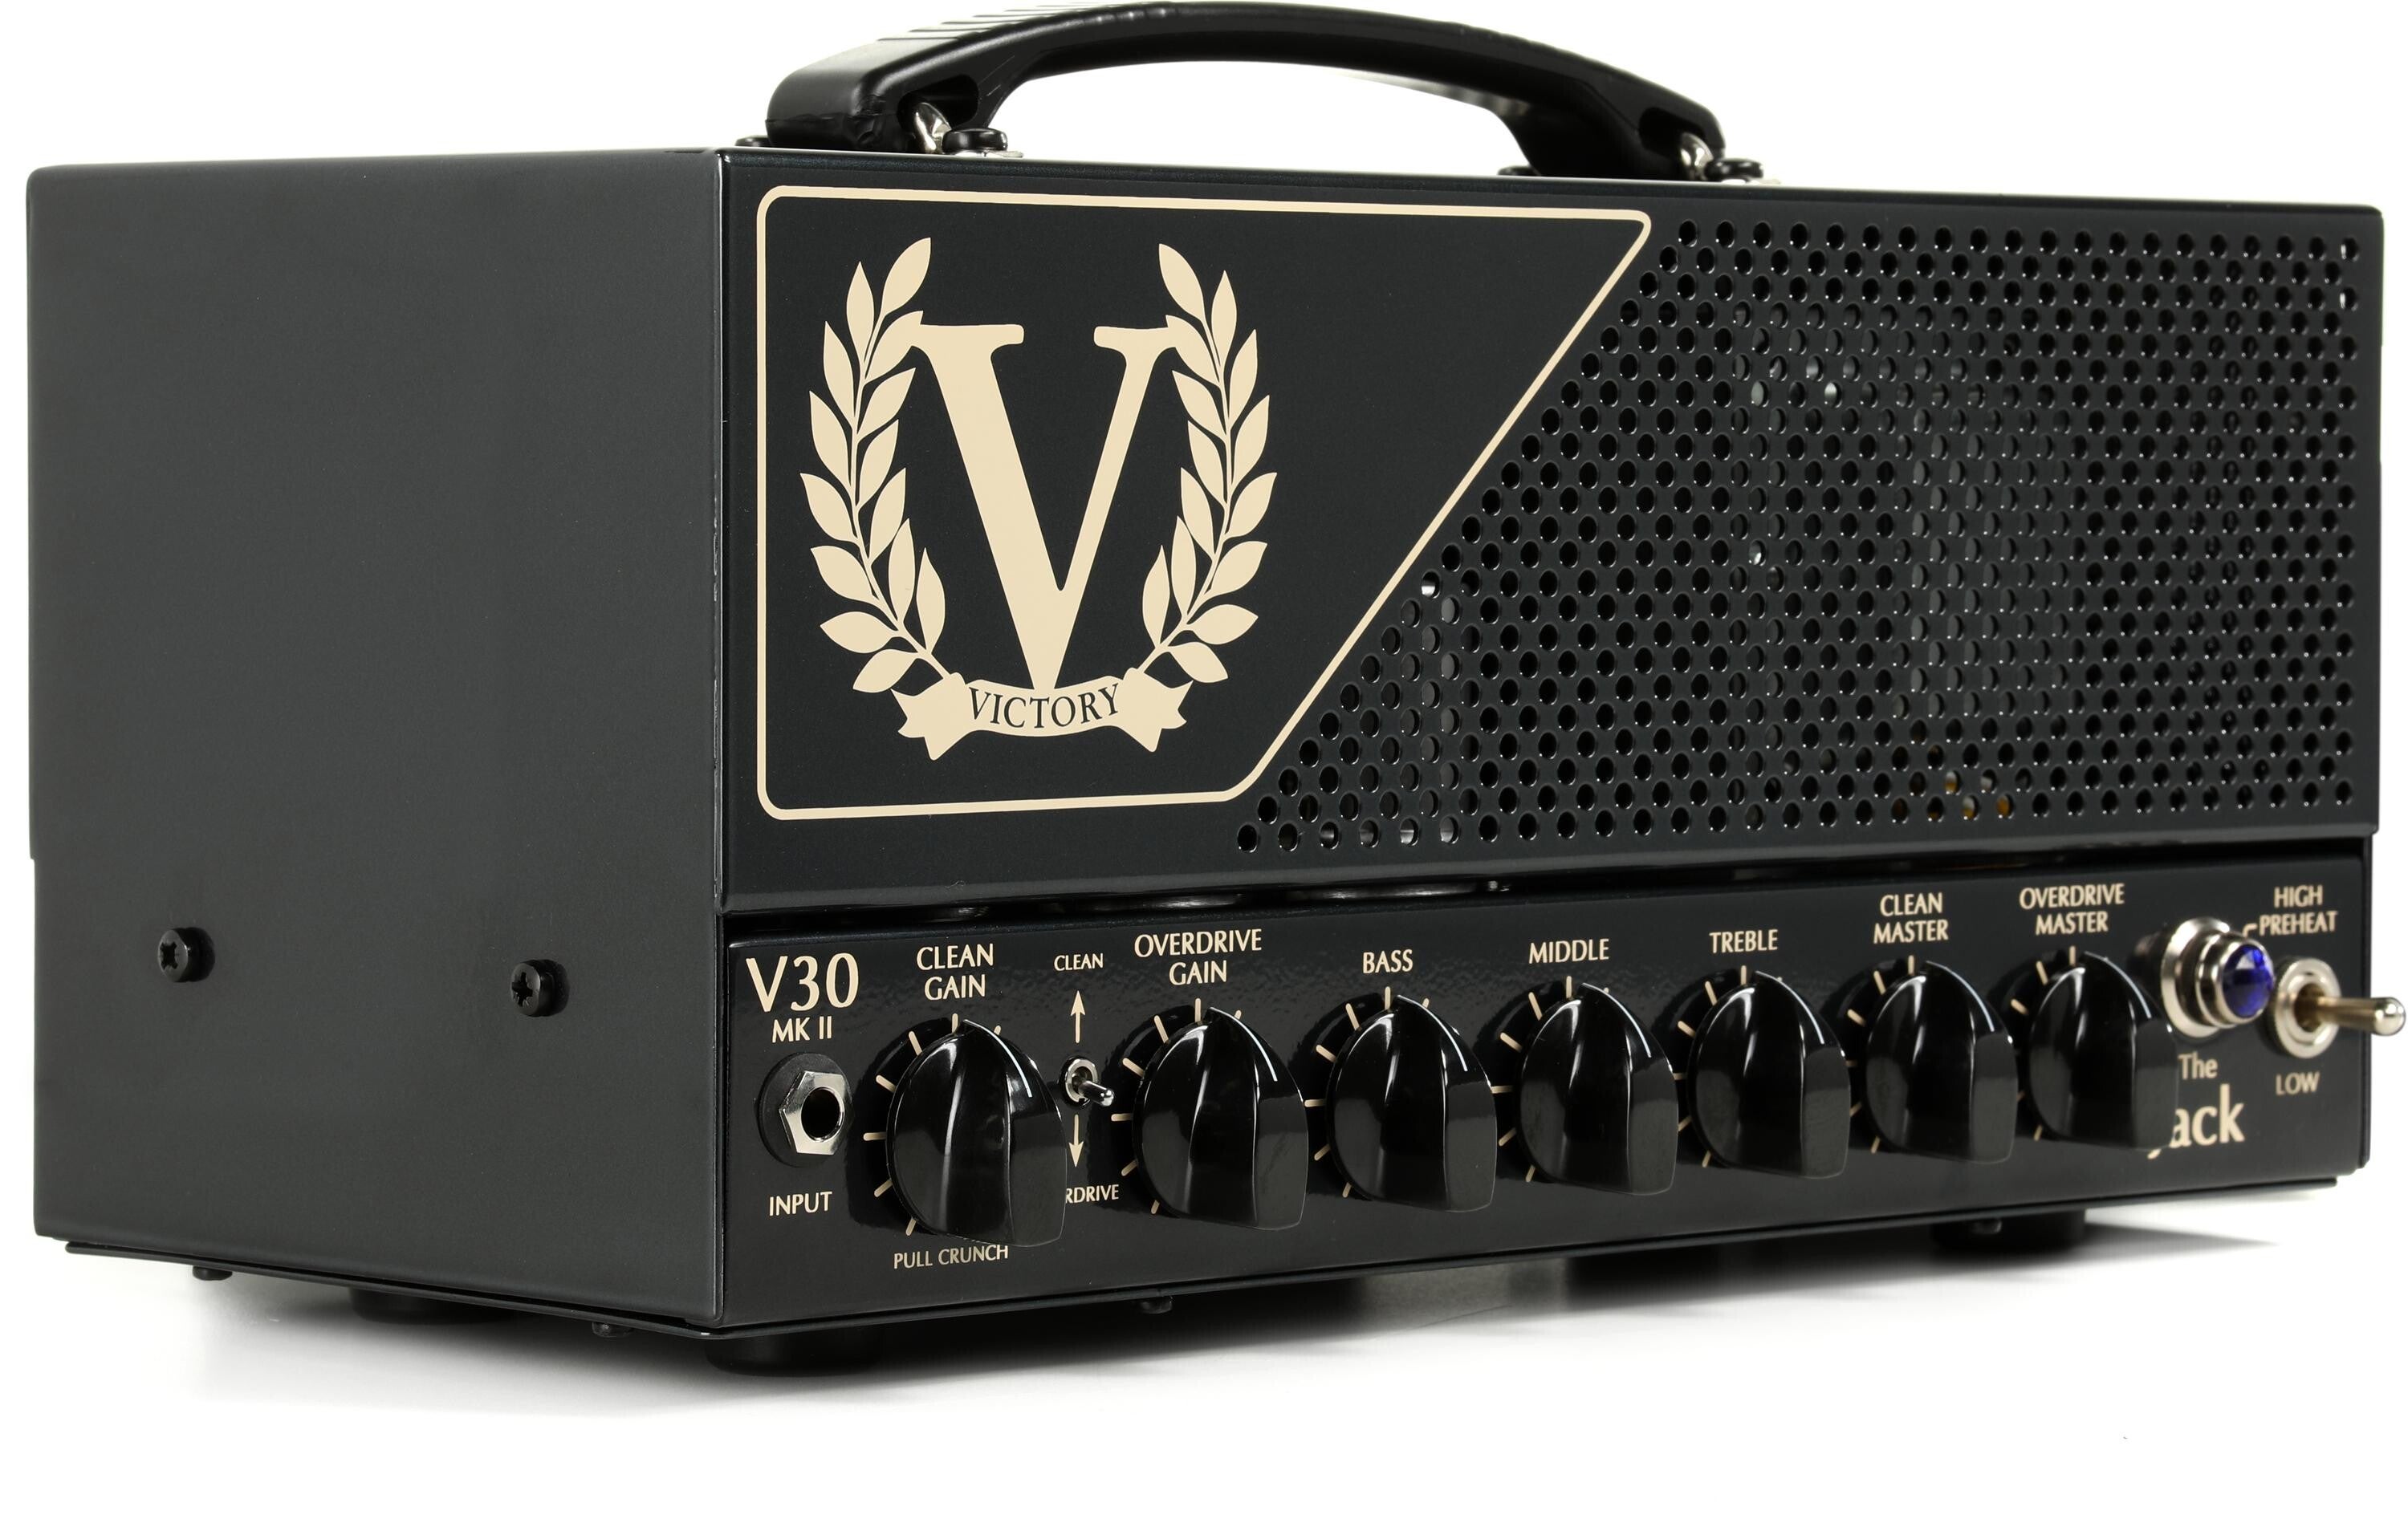 Victory Amplification V30 The Jack MKII 40-watt Tube Guitar Amp Head